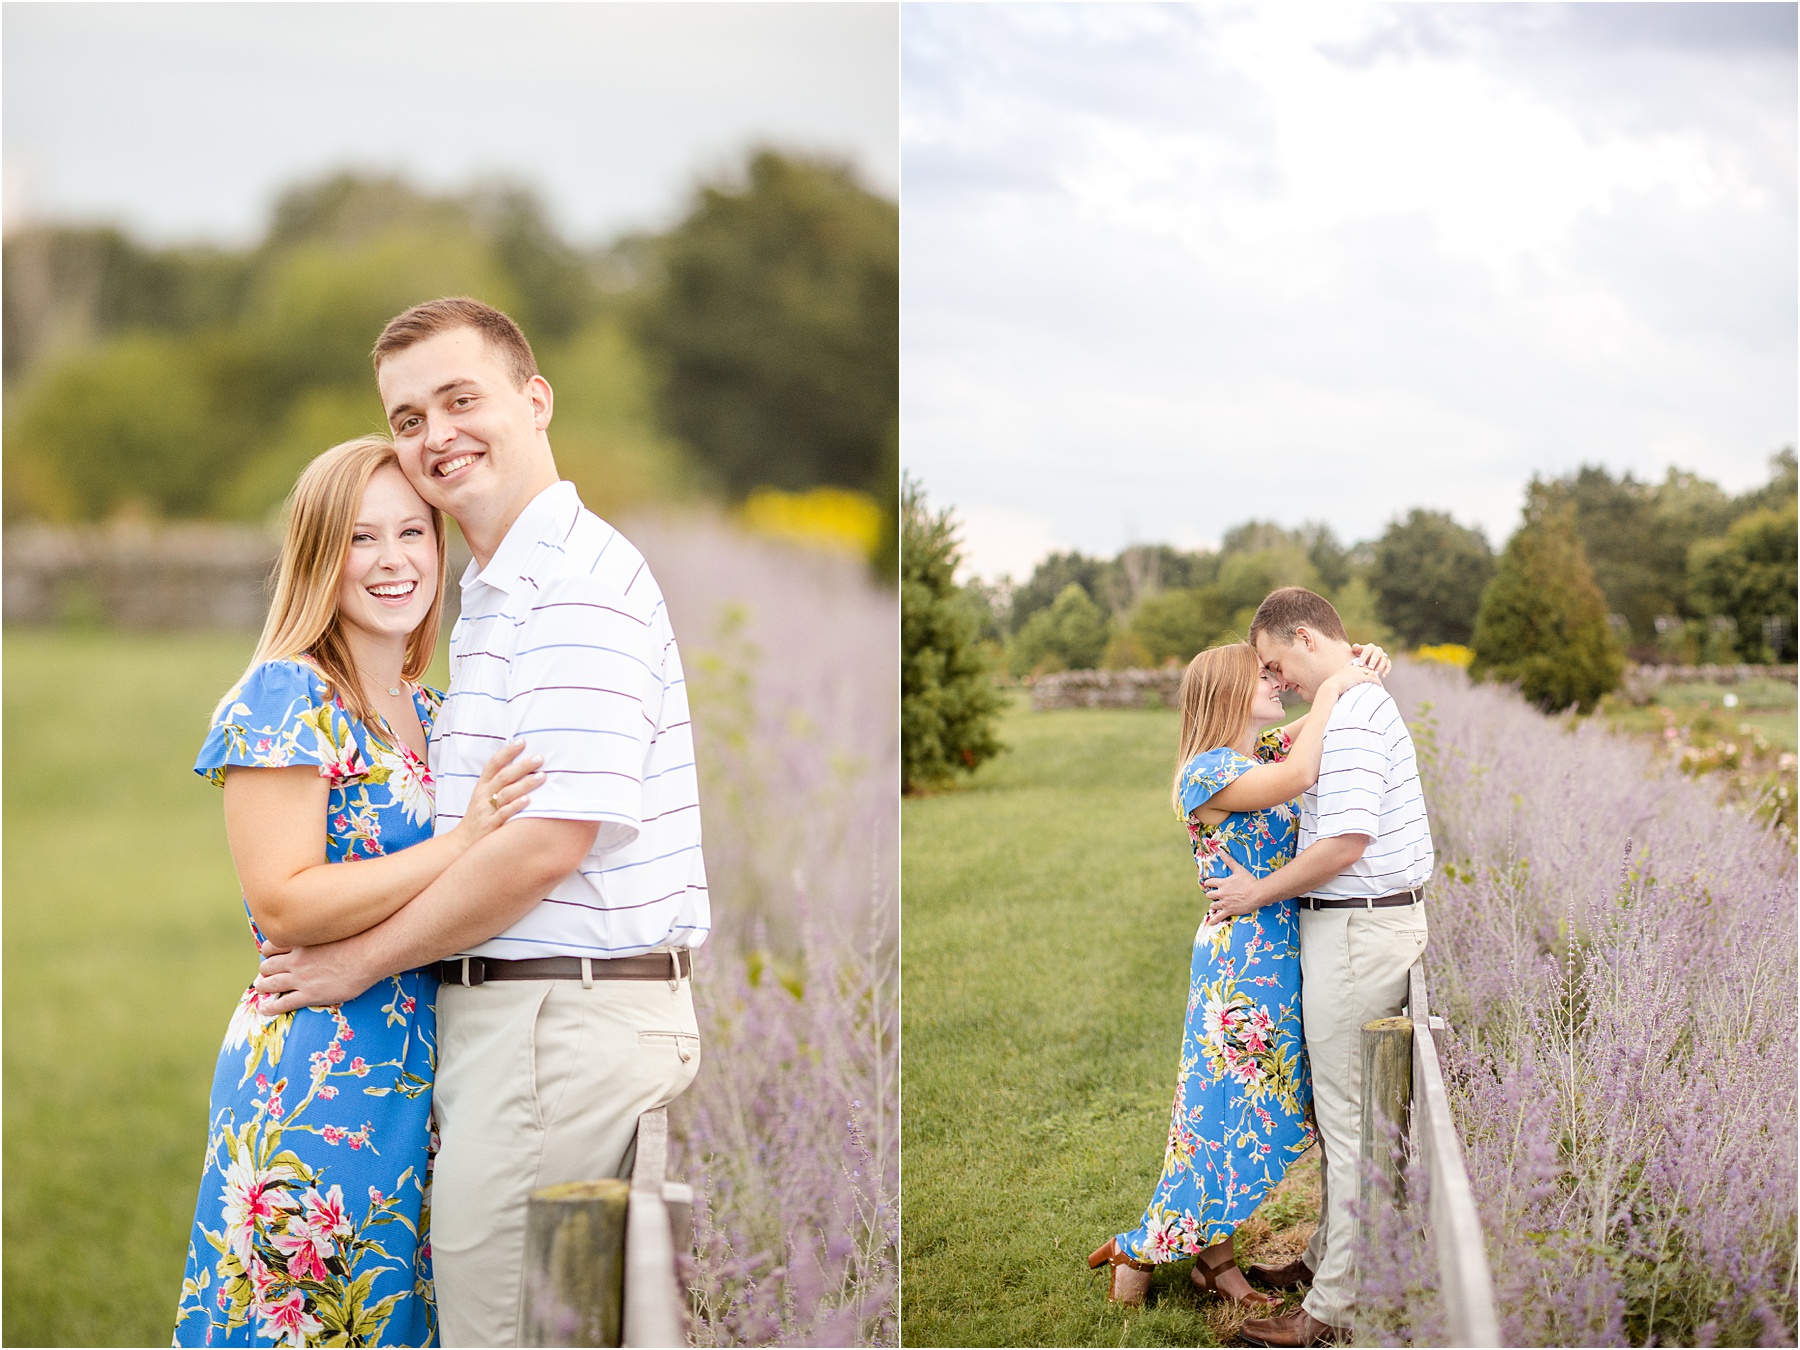 Engagement photos in Kentucky at University botanical gardens